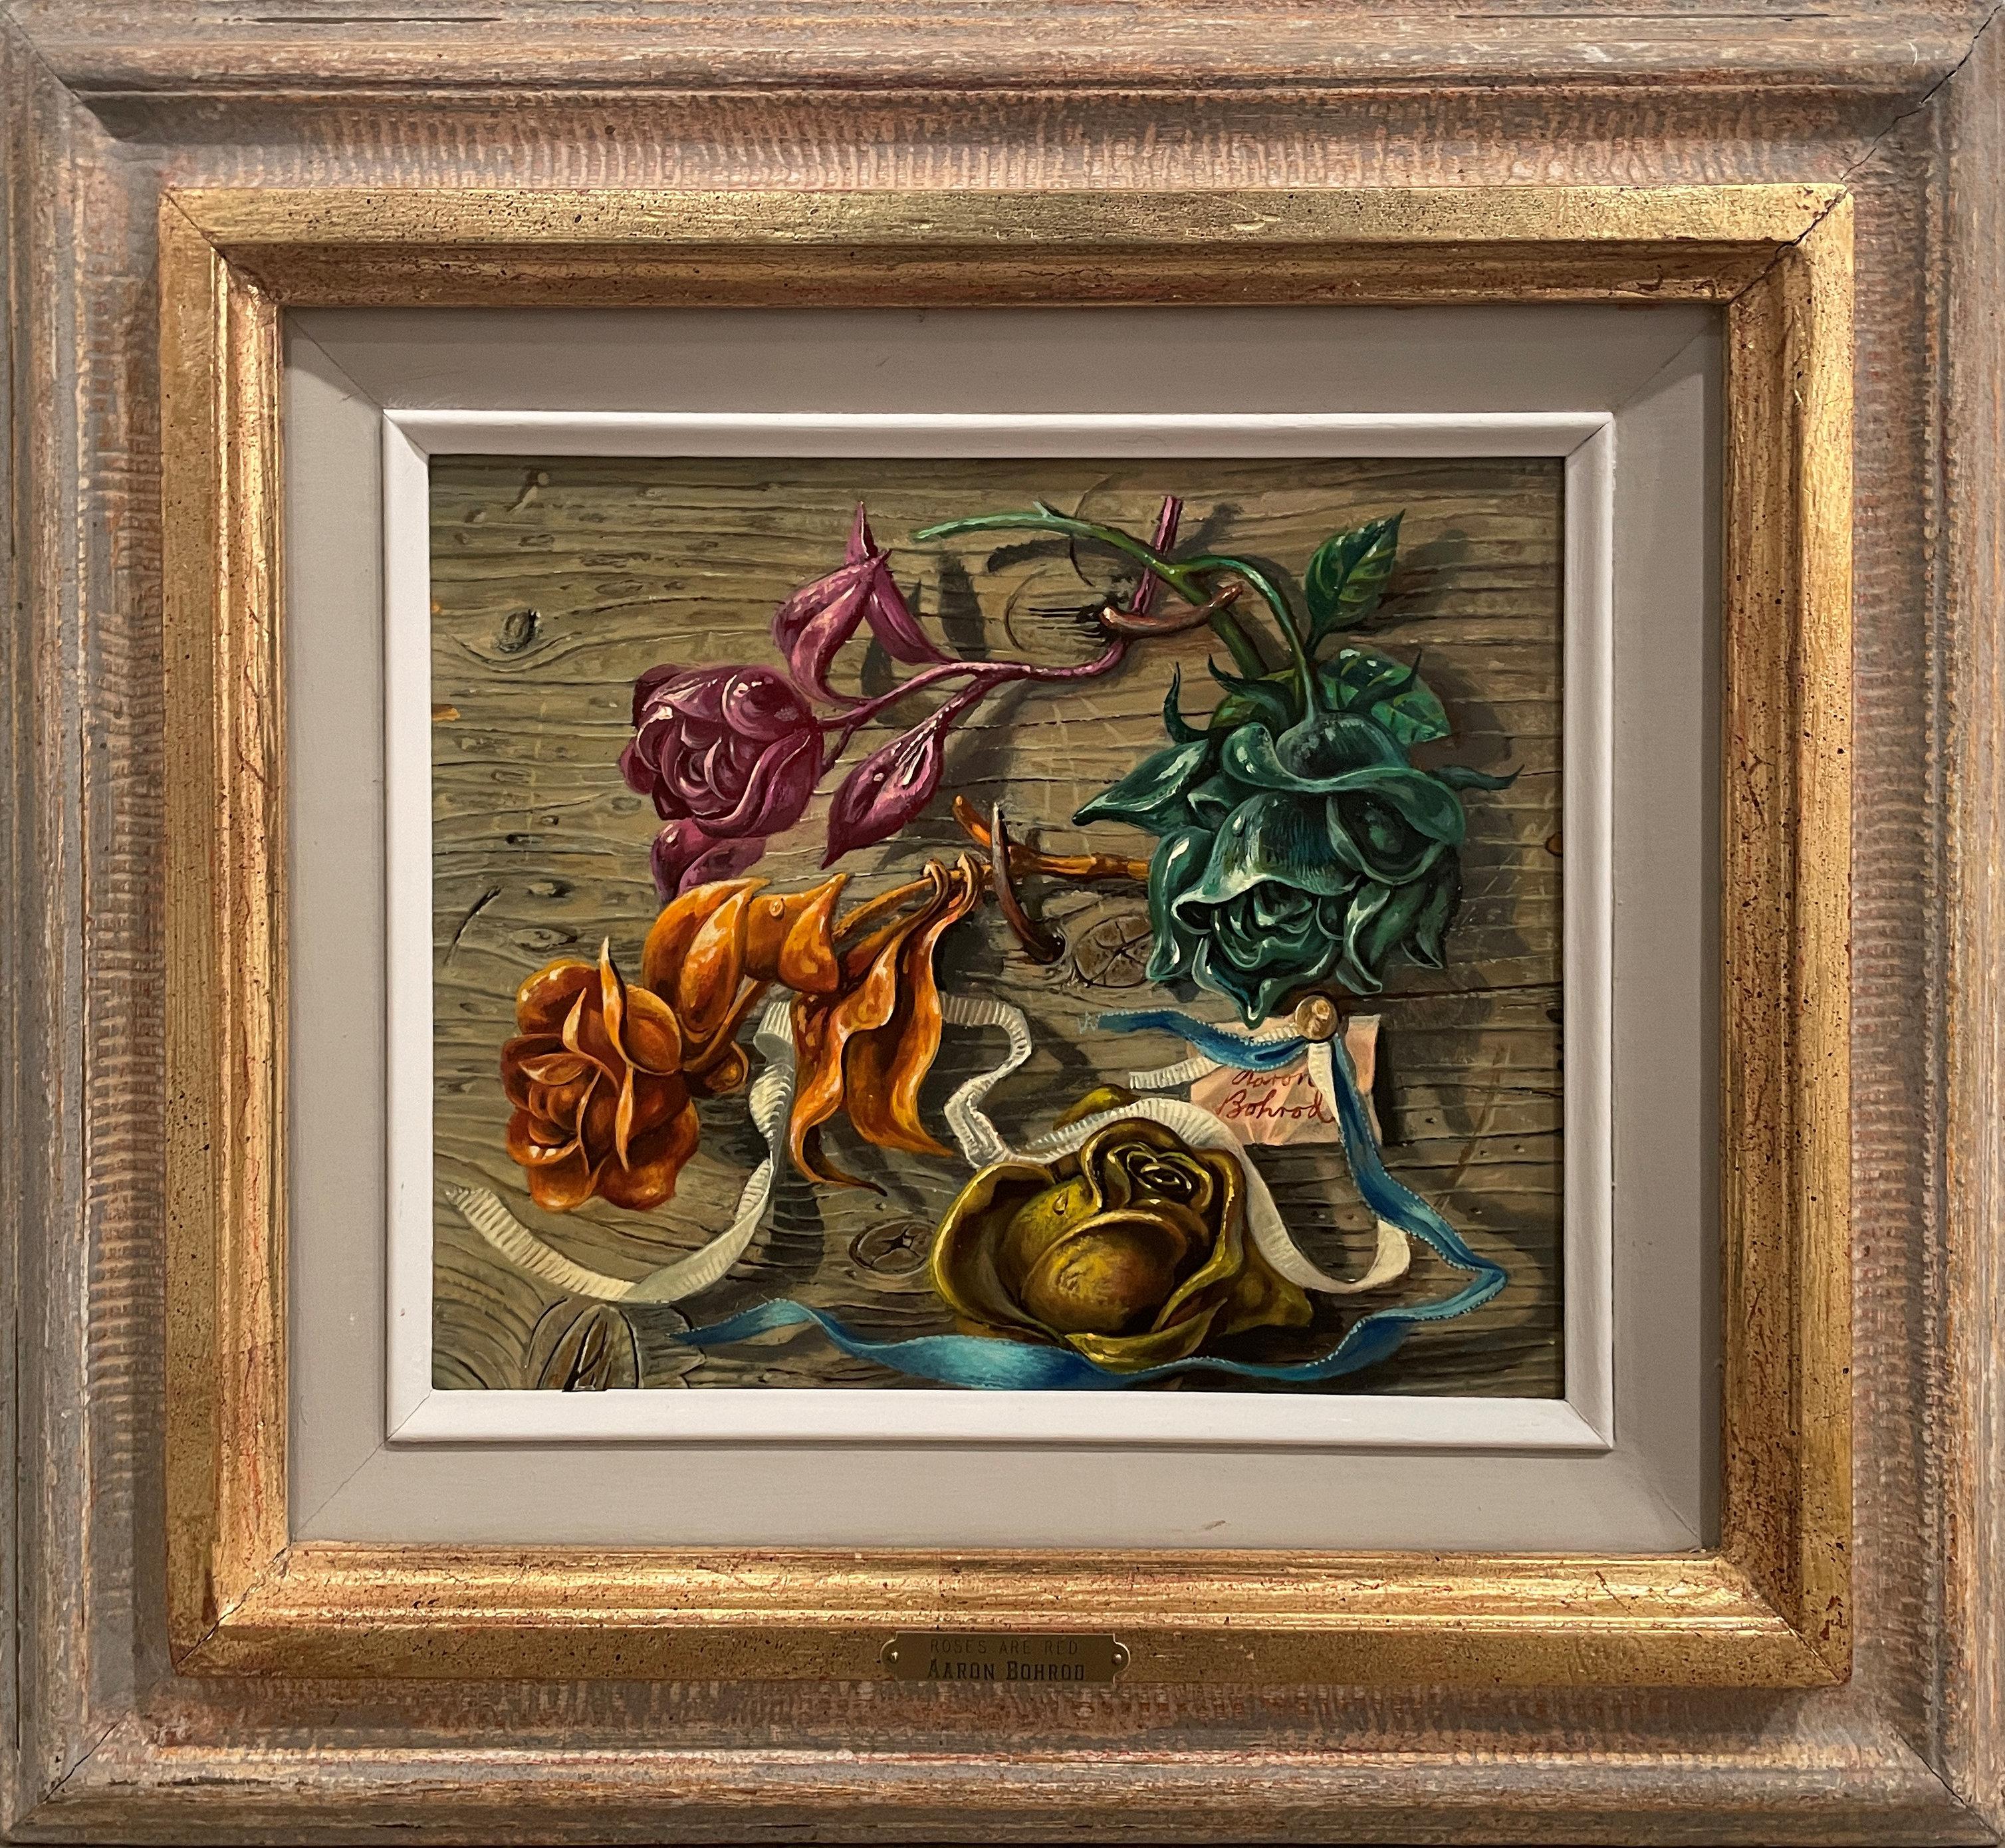 „Roses are Red“ Aaron Bohrod, Pun Humor, magischer Realismus, farbenfrohe Blumen im Angebot 1